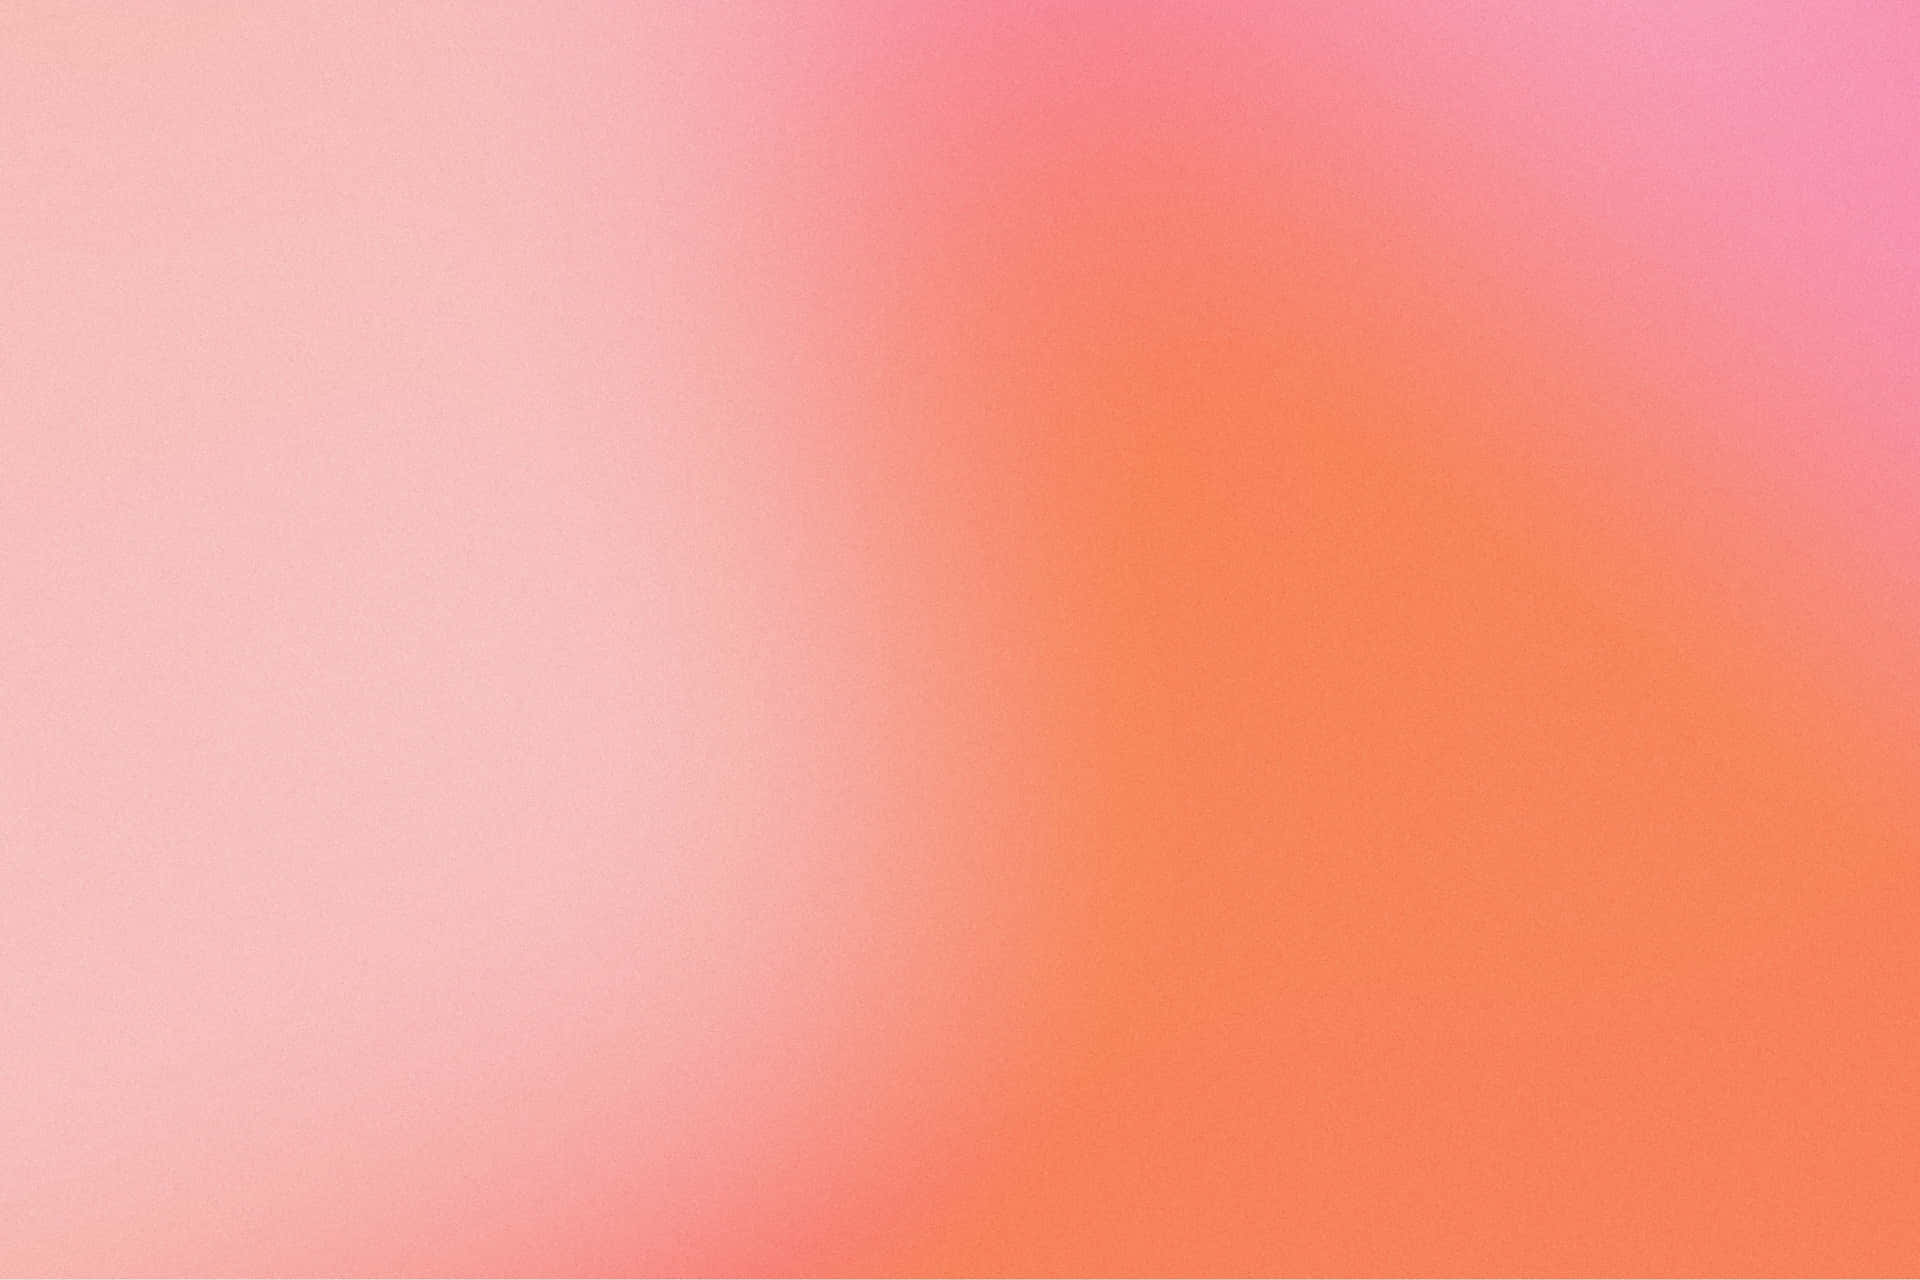 Pinkto Orange Gradient Background Wallpaper